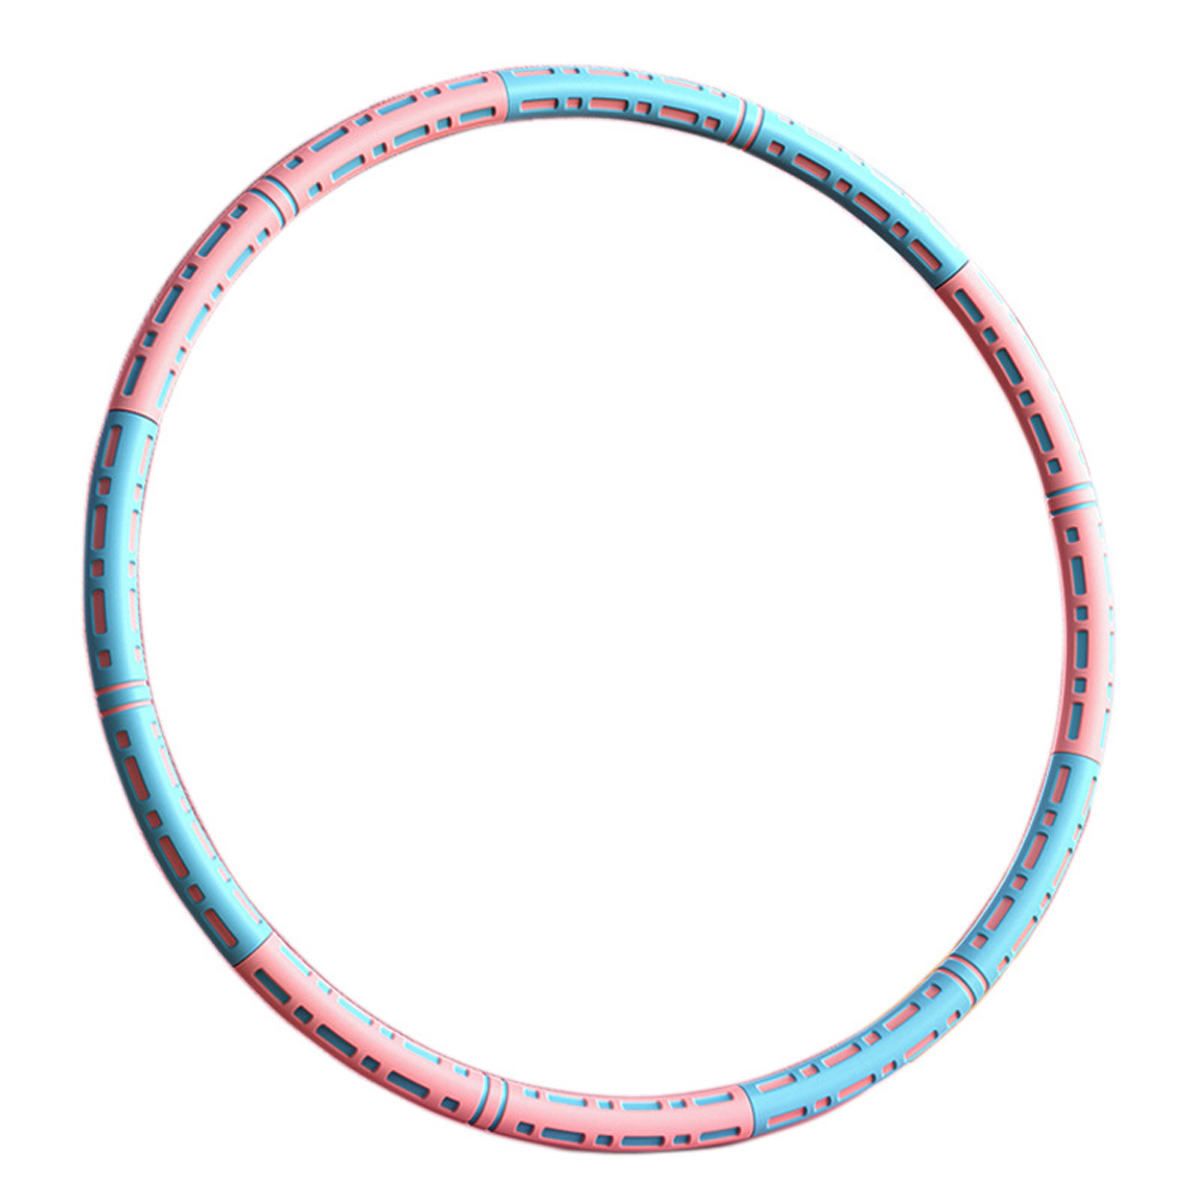 Schnitte,Abnehmbar,Fitness-Reifen,Hula anspruch LEIGO Hoop Blau-Pink jeden für Hula-Hoop-Reifen,6 Hula-Hoop-Reifen,